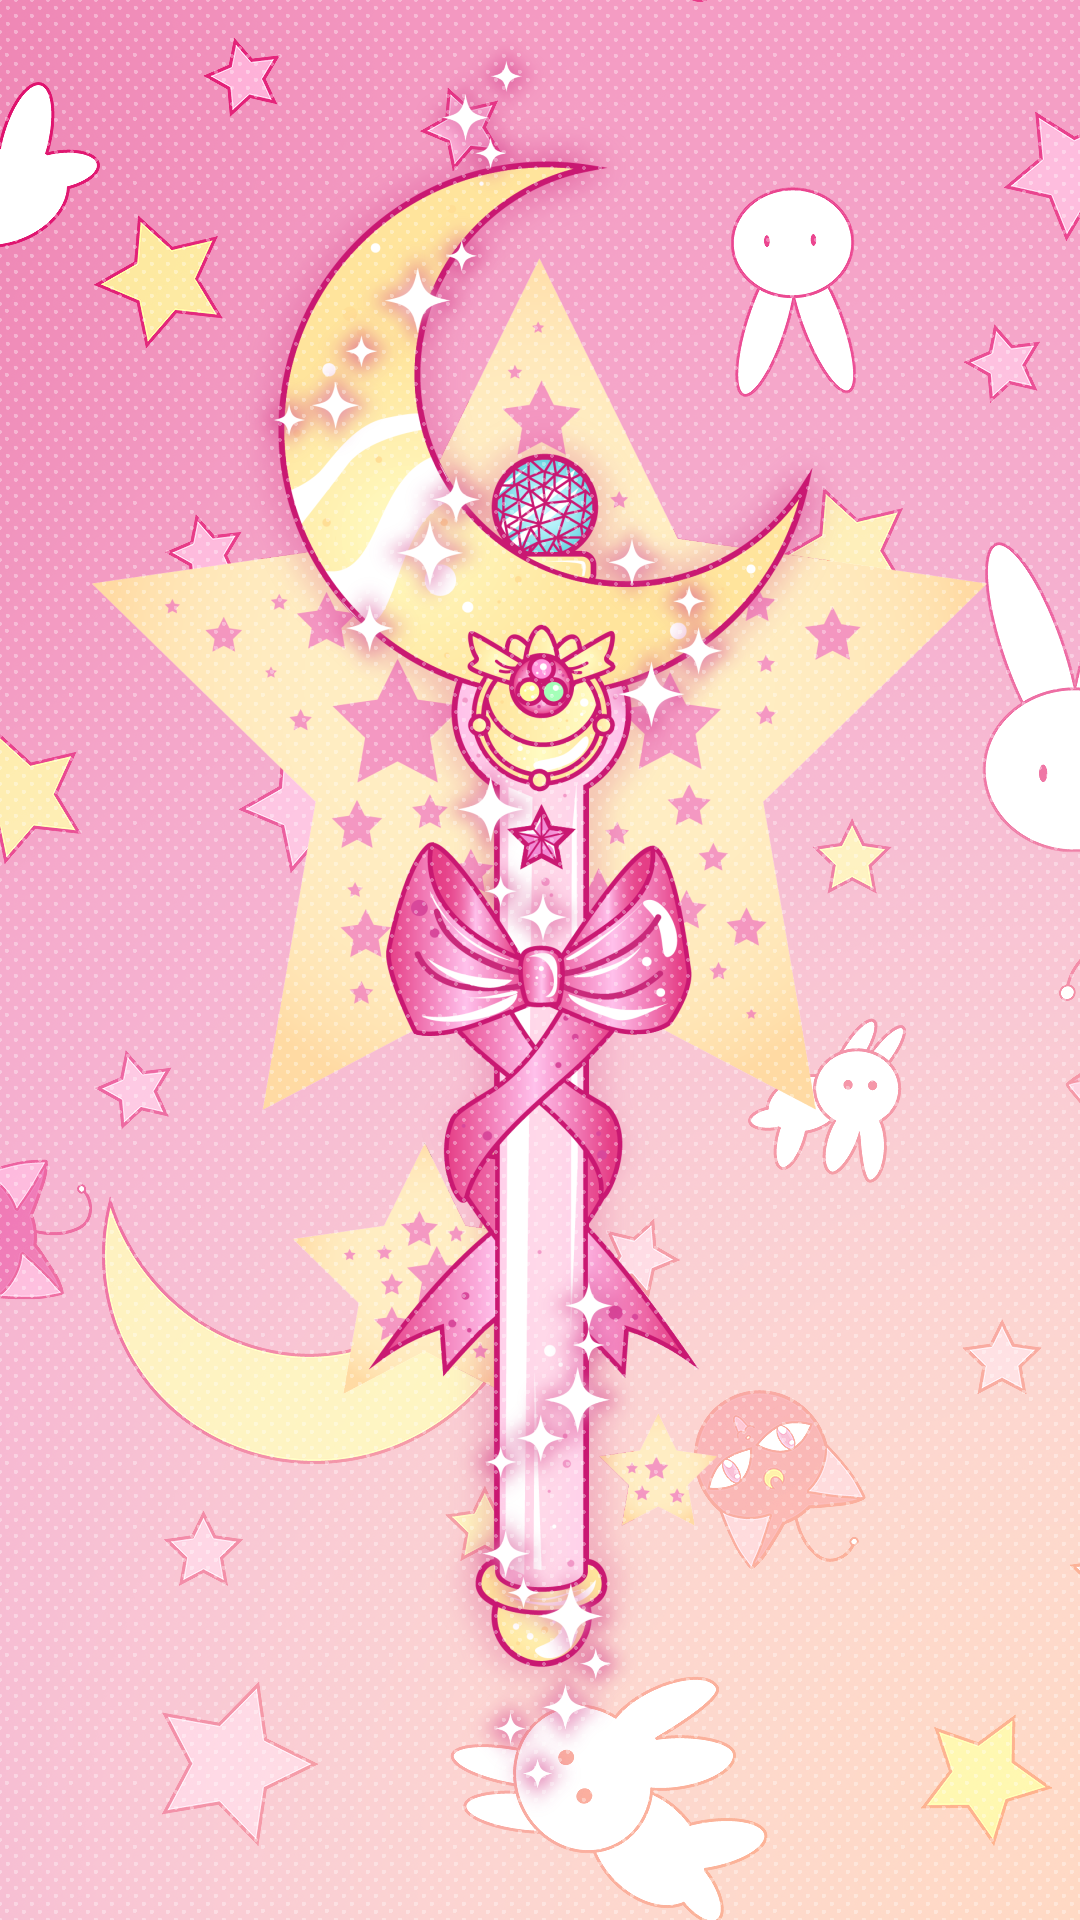 Sailor moon cute pink wallpaper 1080 x 1920 HD (anime, otaku, magical girl, magic wand, star). Sailor moon wallpaper, Sailor moon usagi, Sailor moon fan art